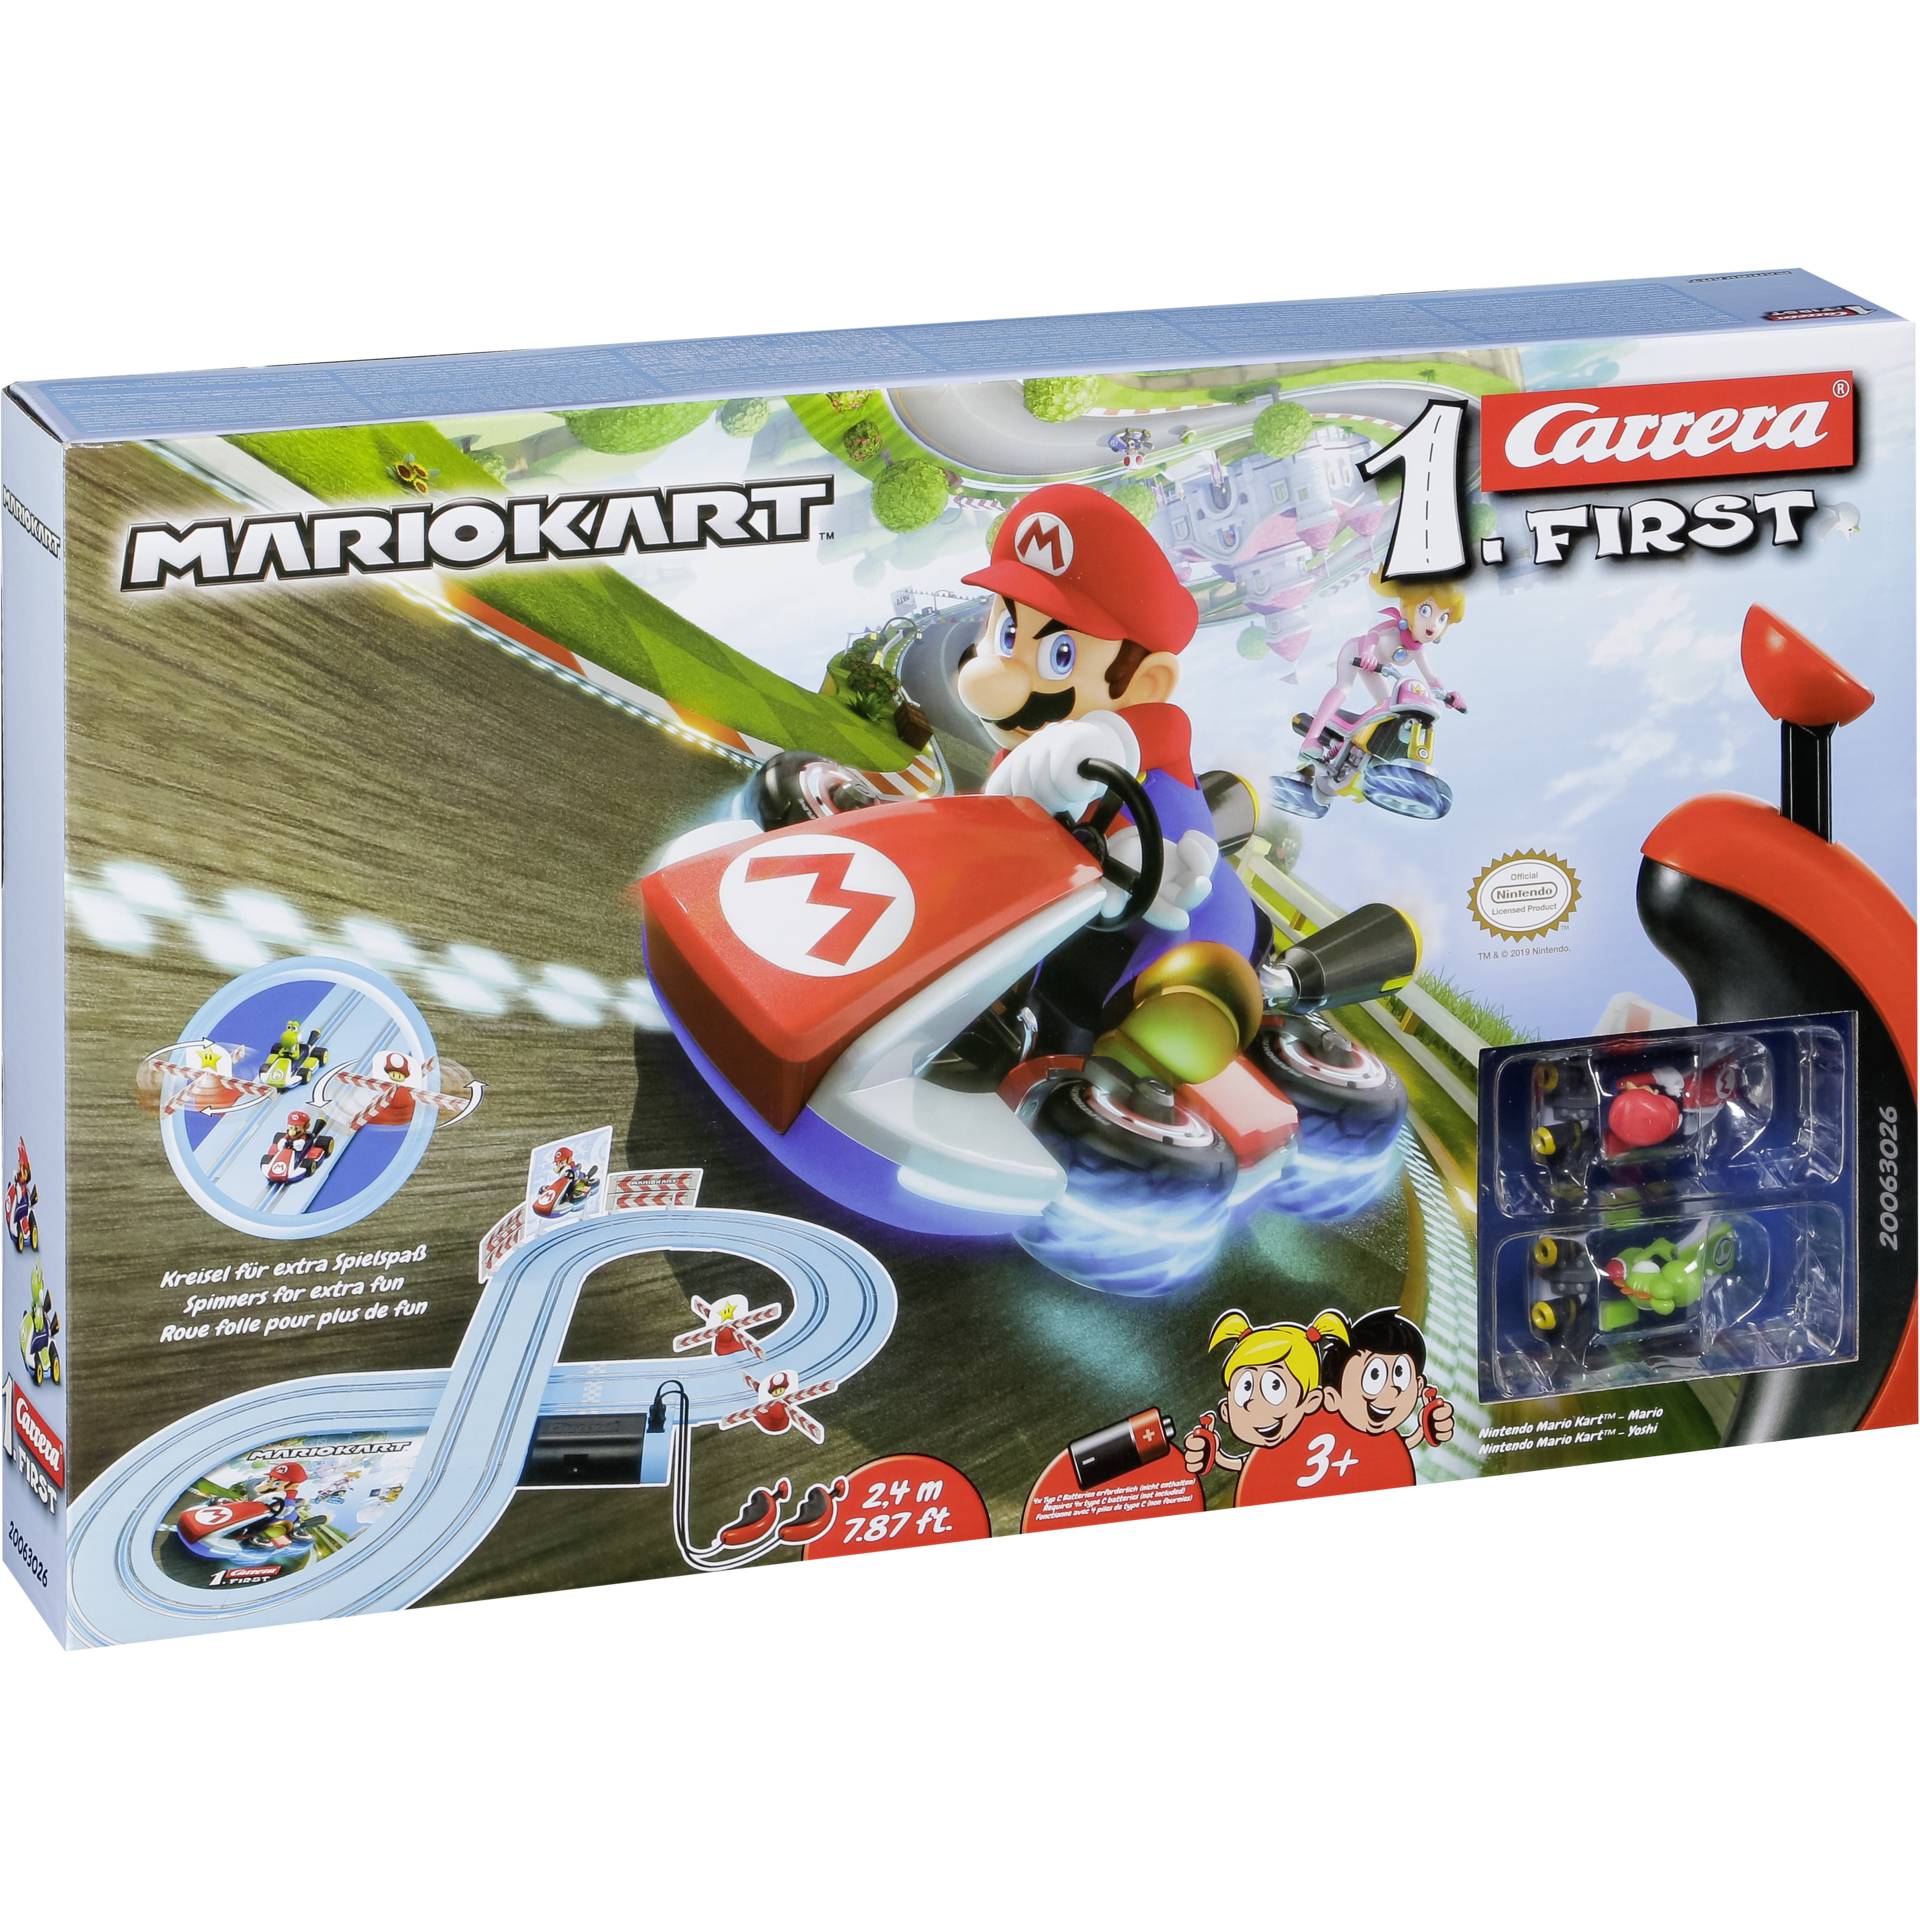 Carrera FIRST Nintendo Mario Kart 2,4 m        20063026